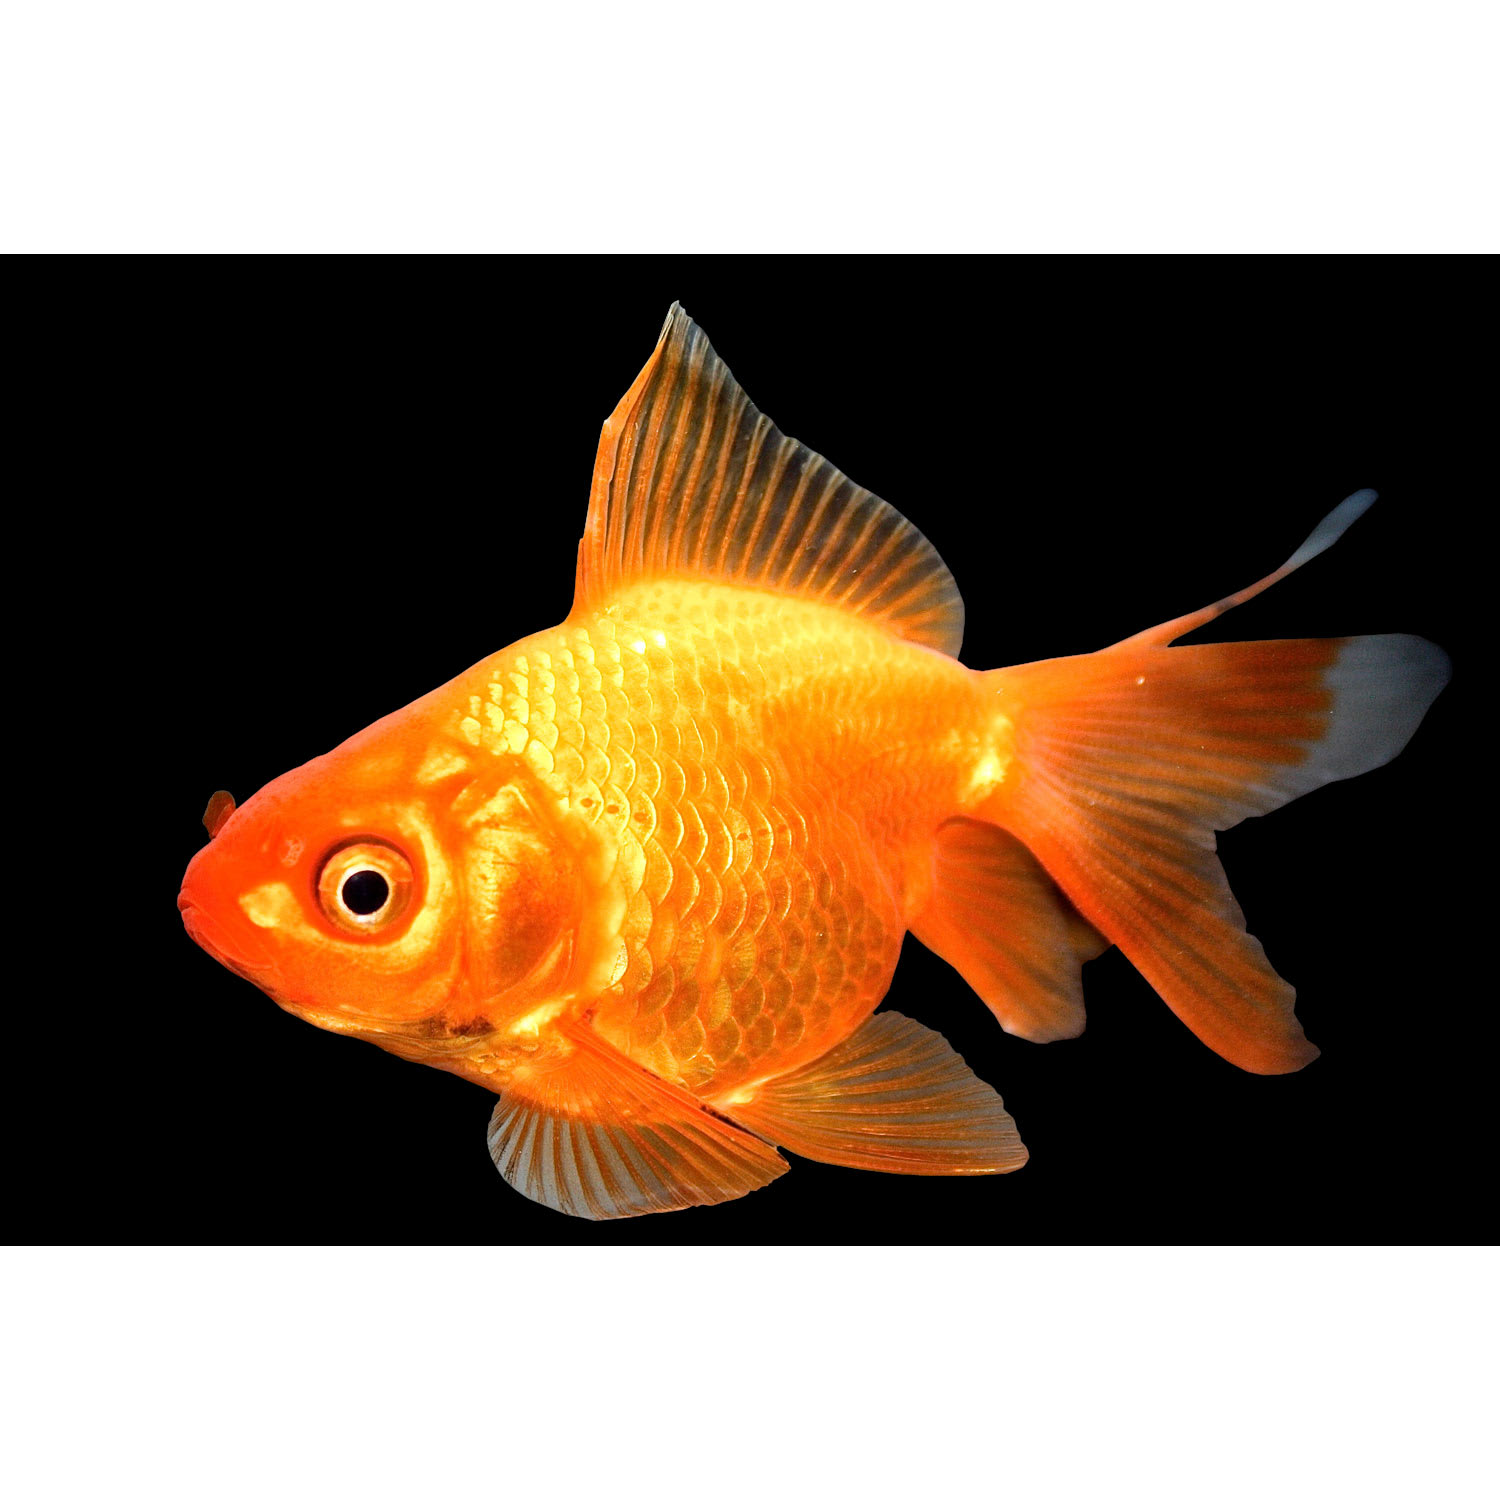 Red Ryukin Goldfish for Sale: Order 